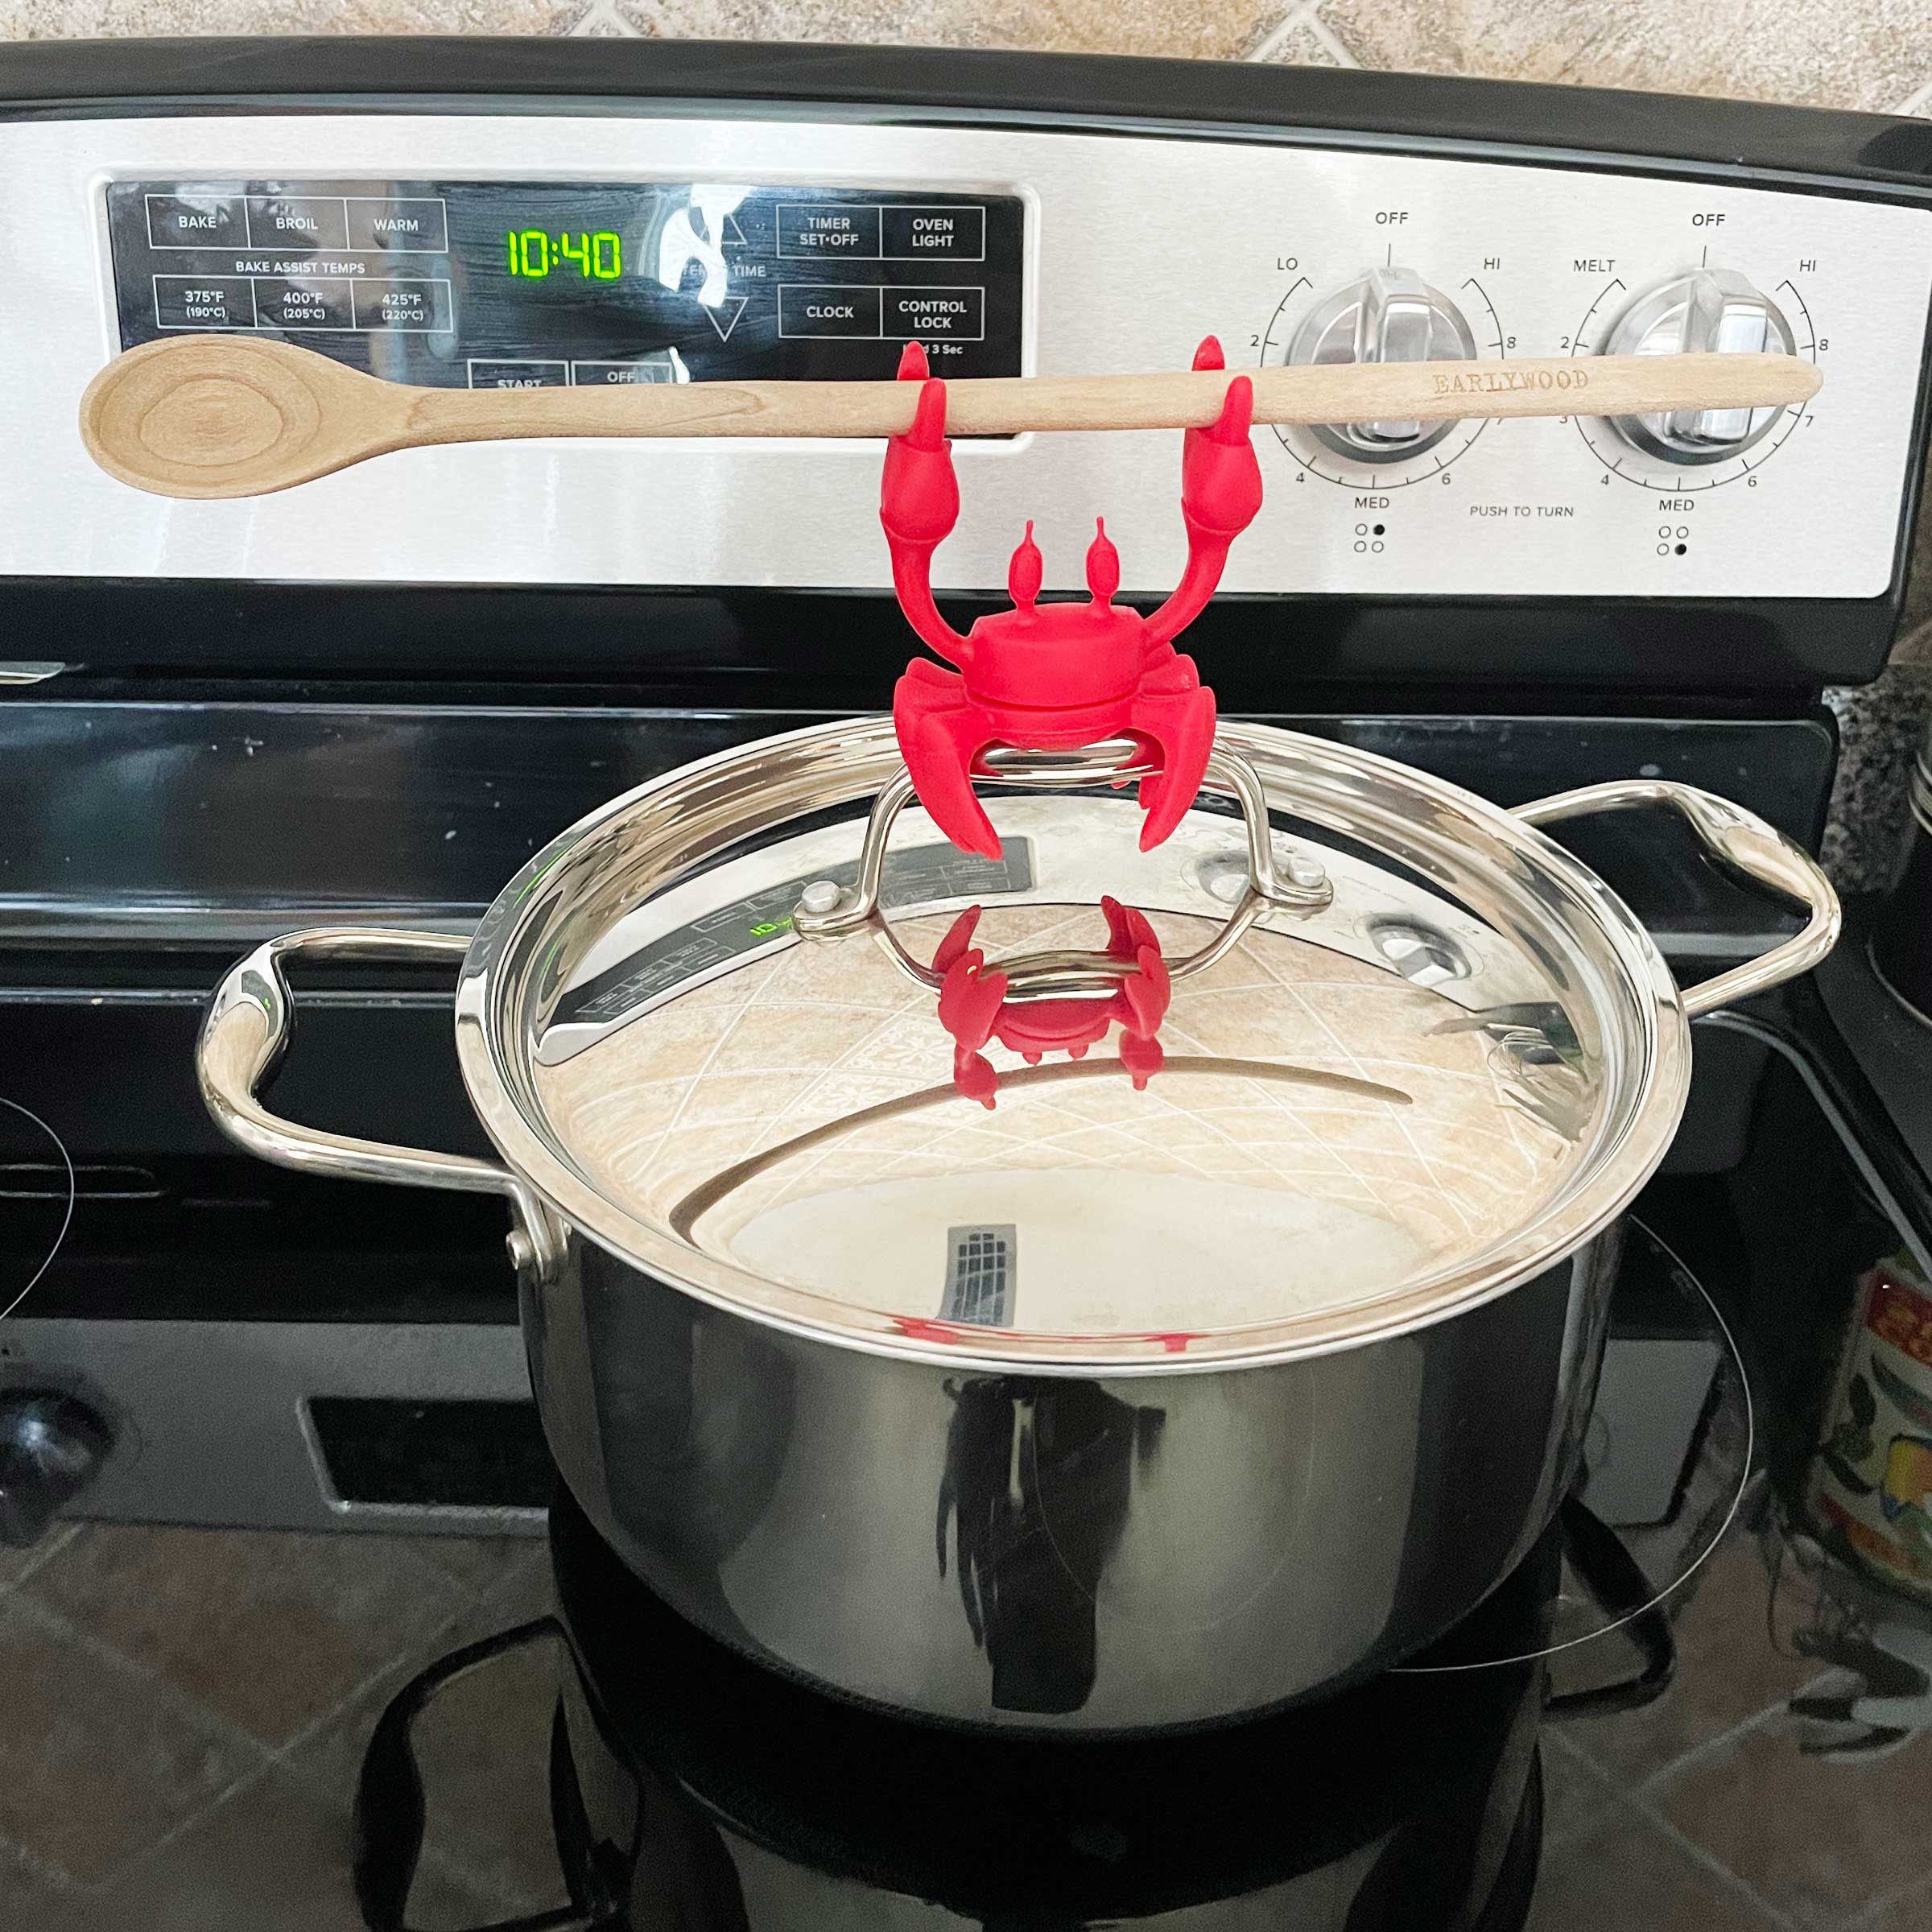  OTOTO Red the Crab Silicone Utensil Rest - Kitchen